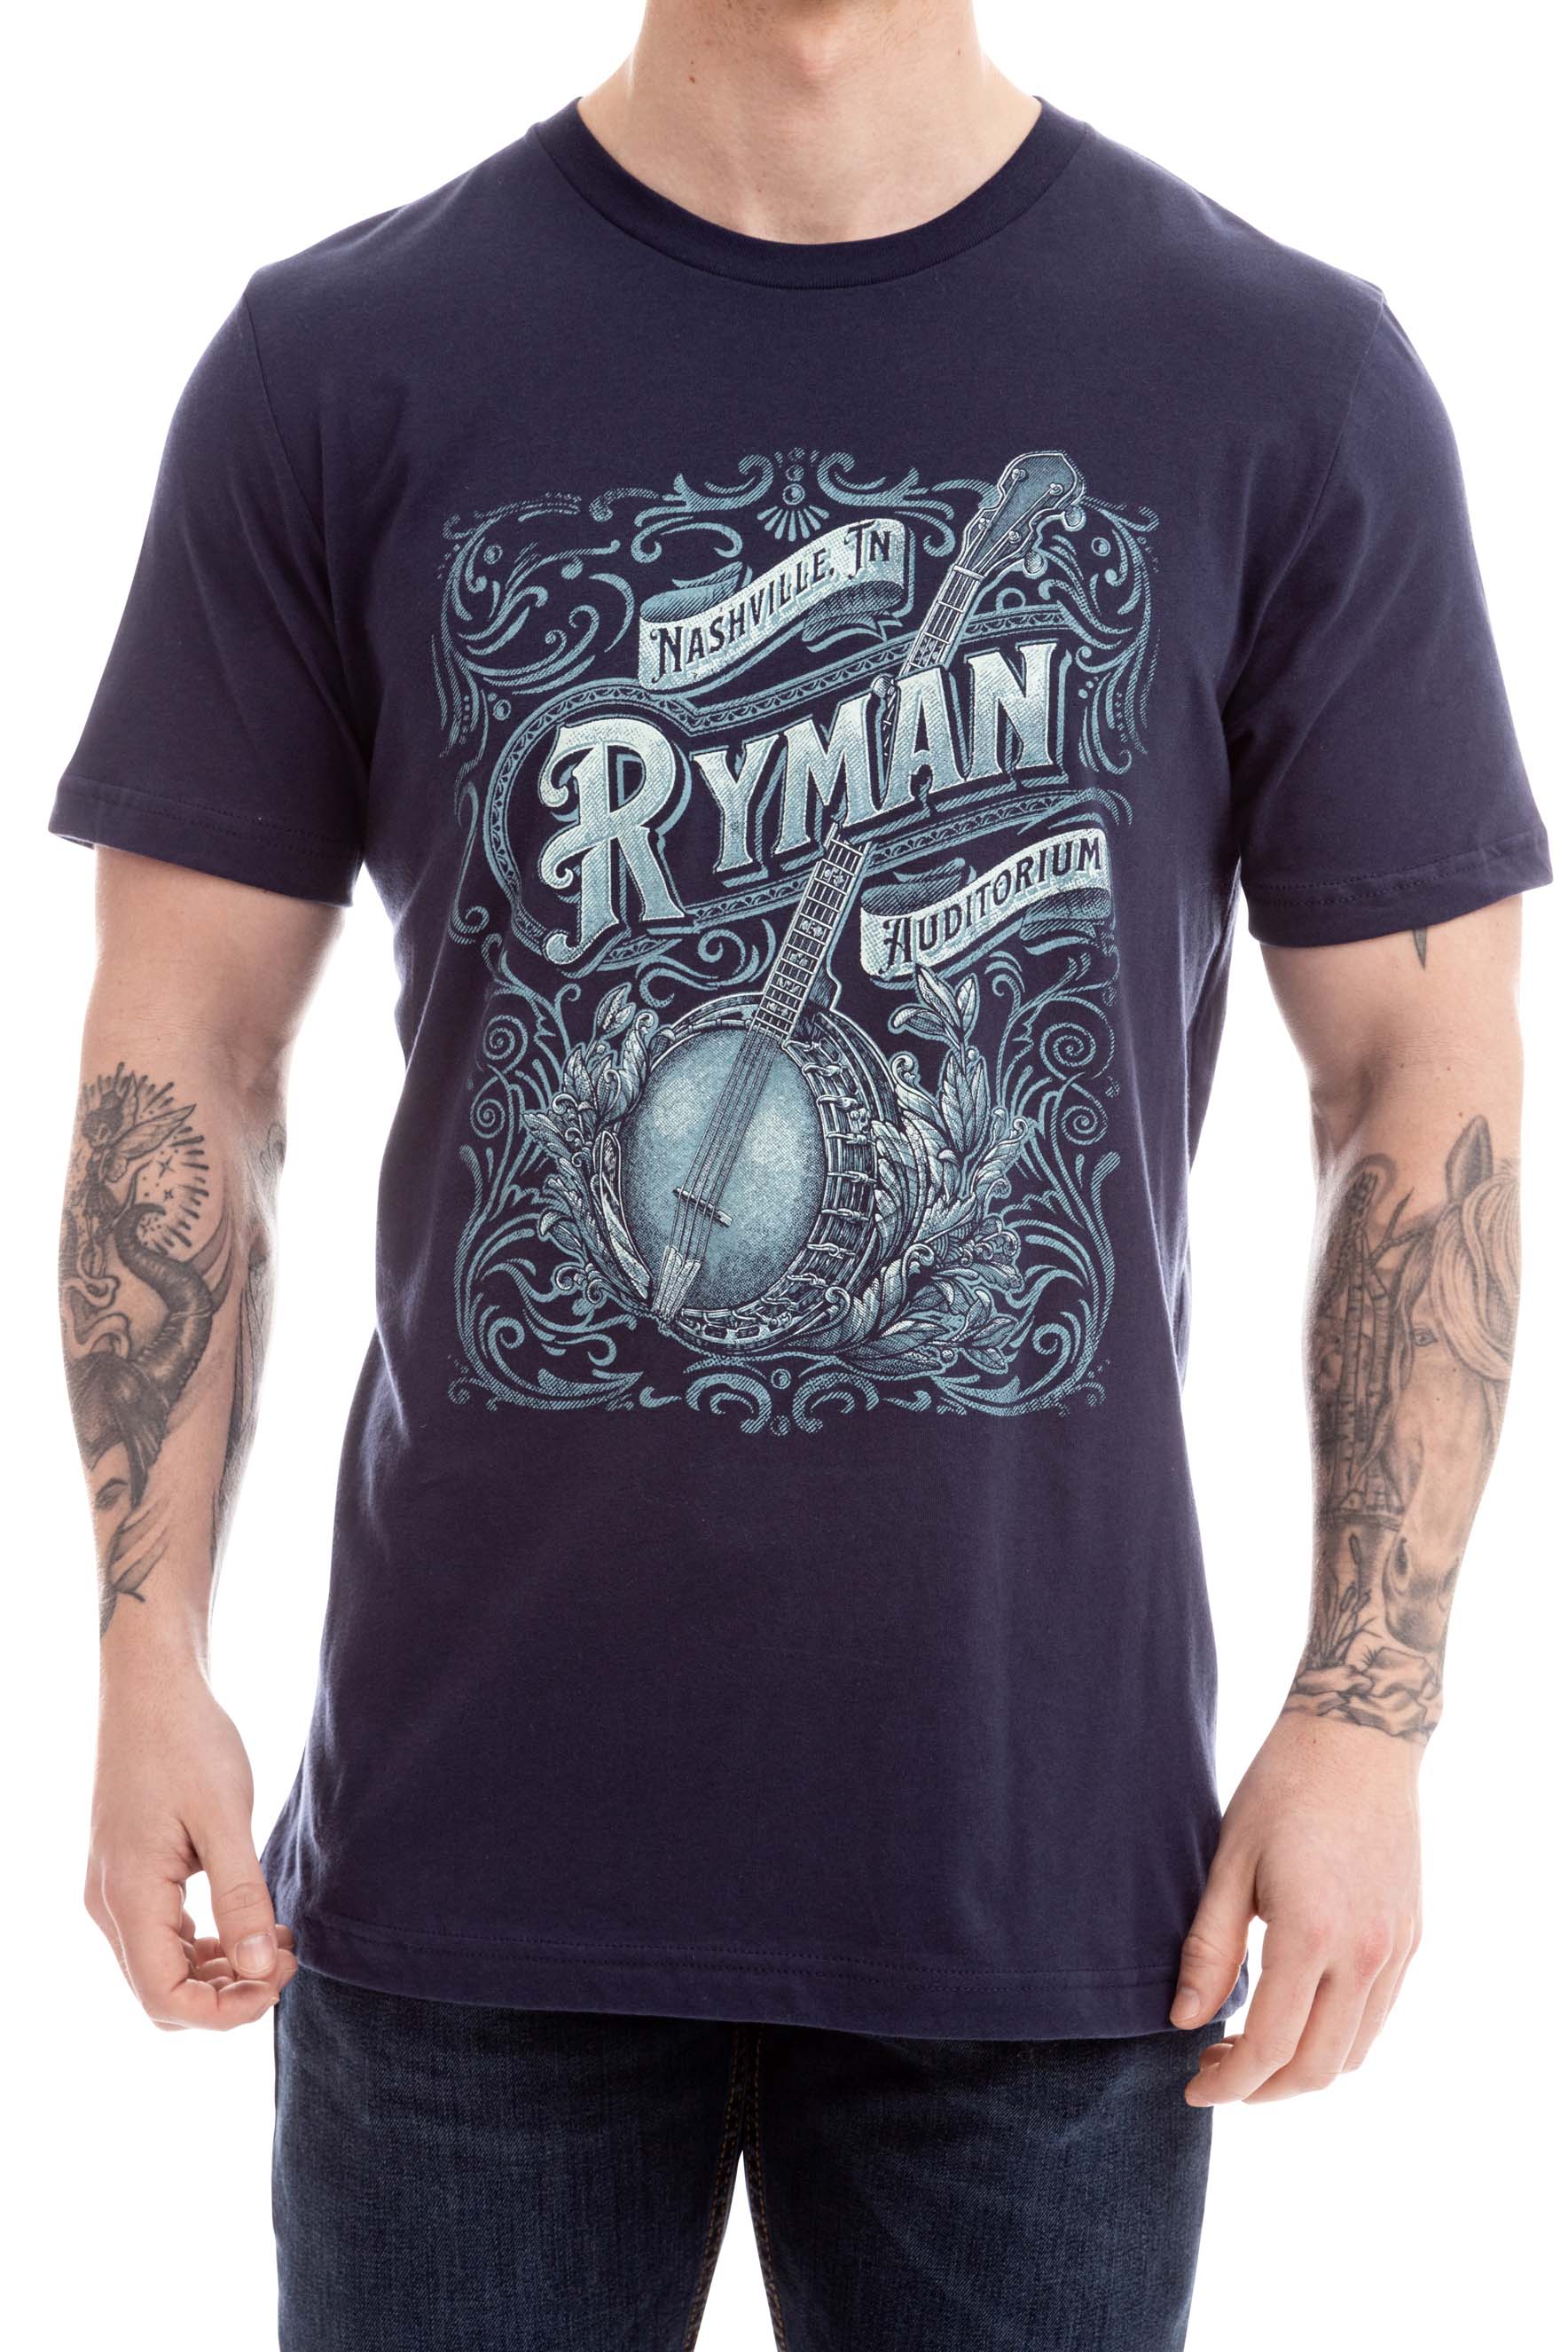 Ryman Bluegrass & Banjos T-Shirt